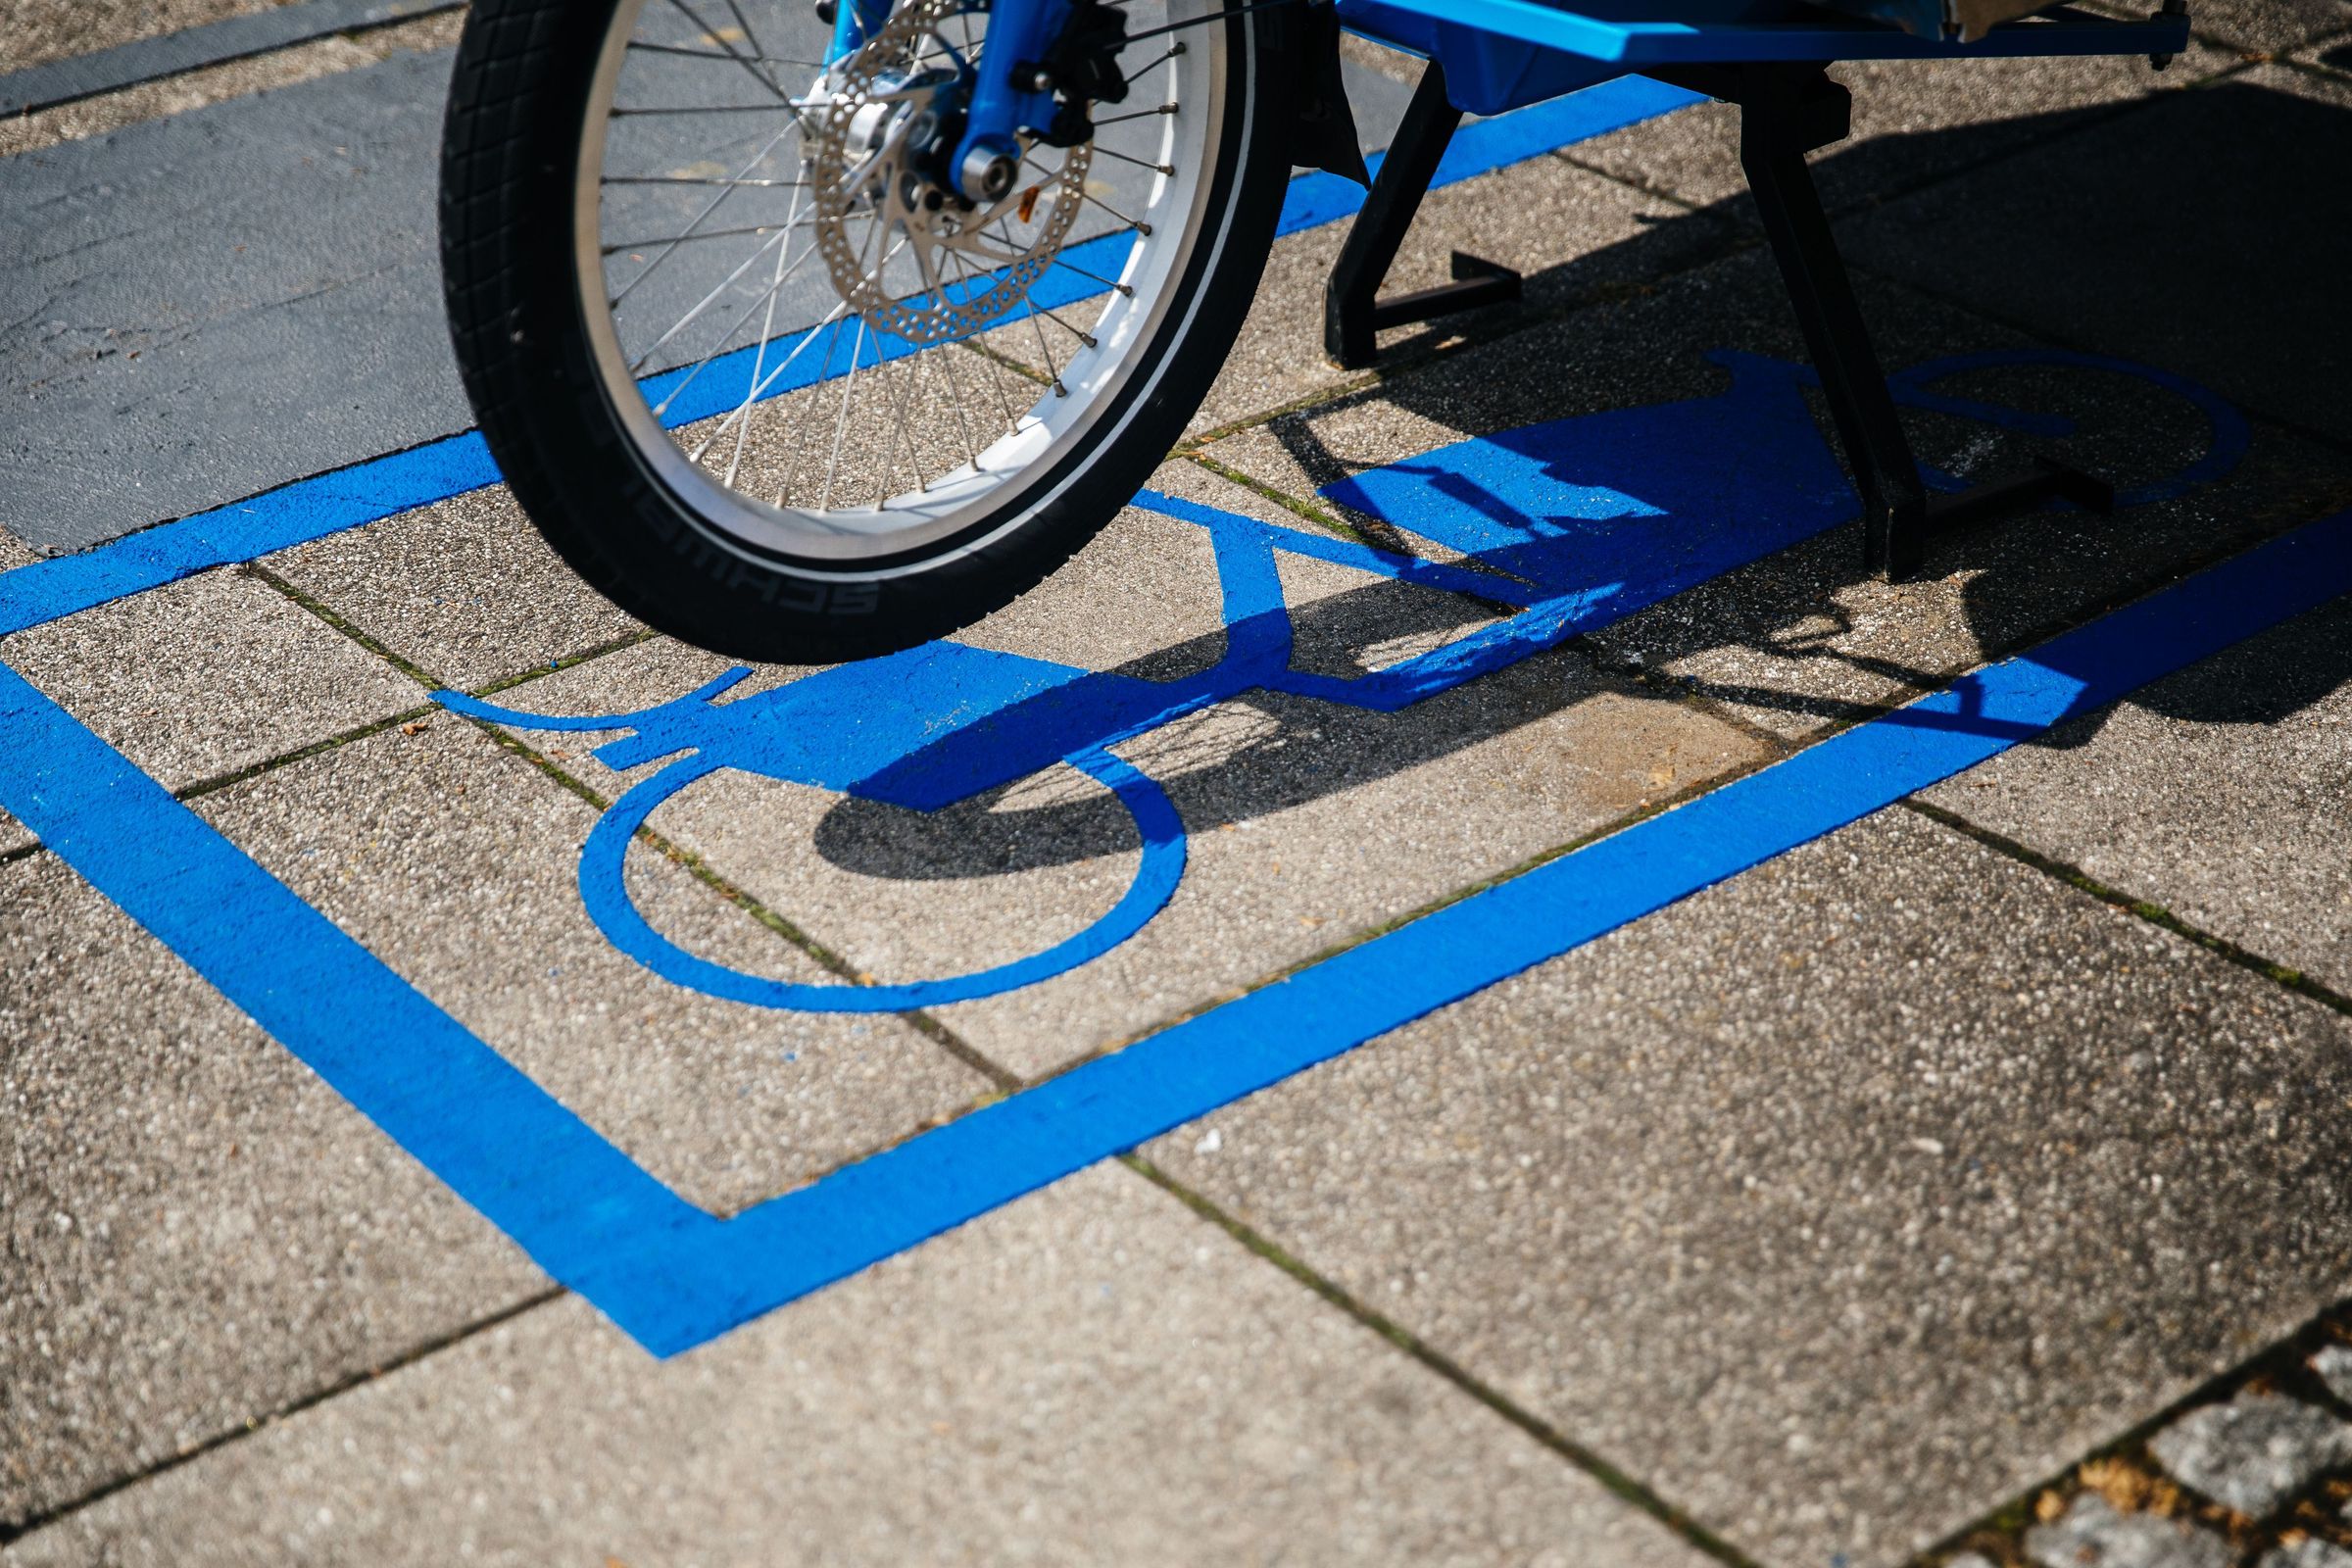 RegioRadStuttgart cargo pedelec on blue floor marking of the parking place